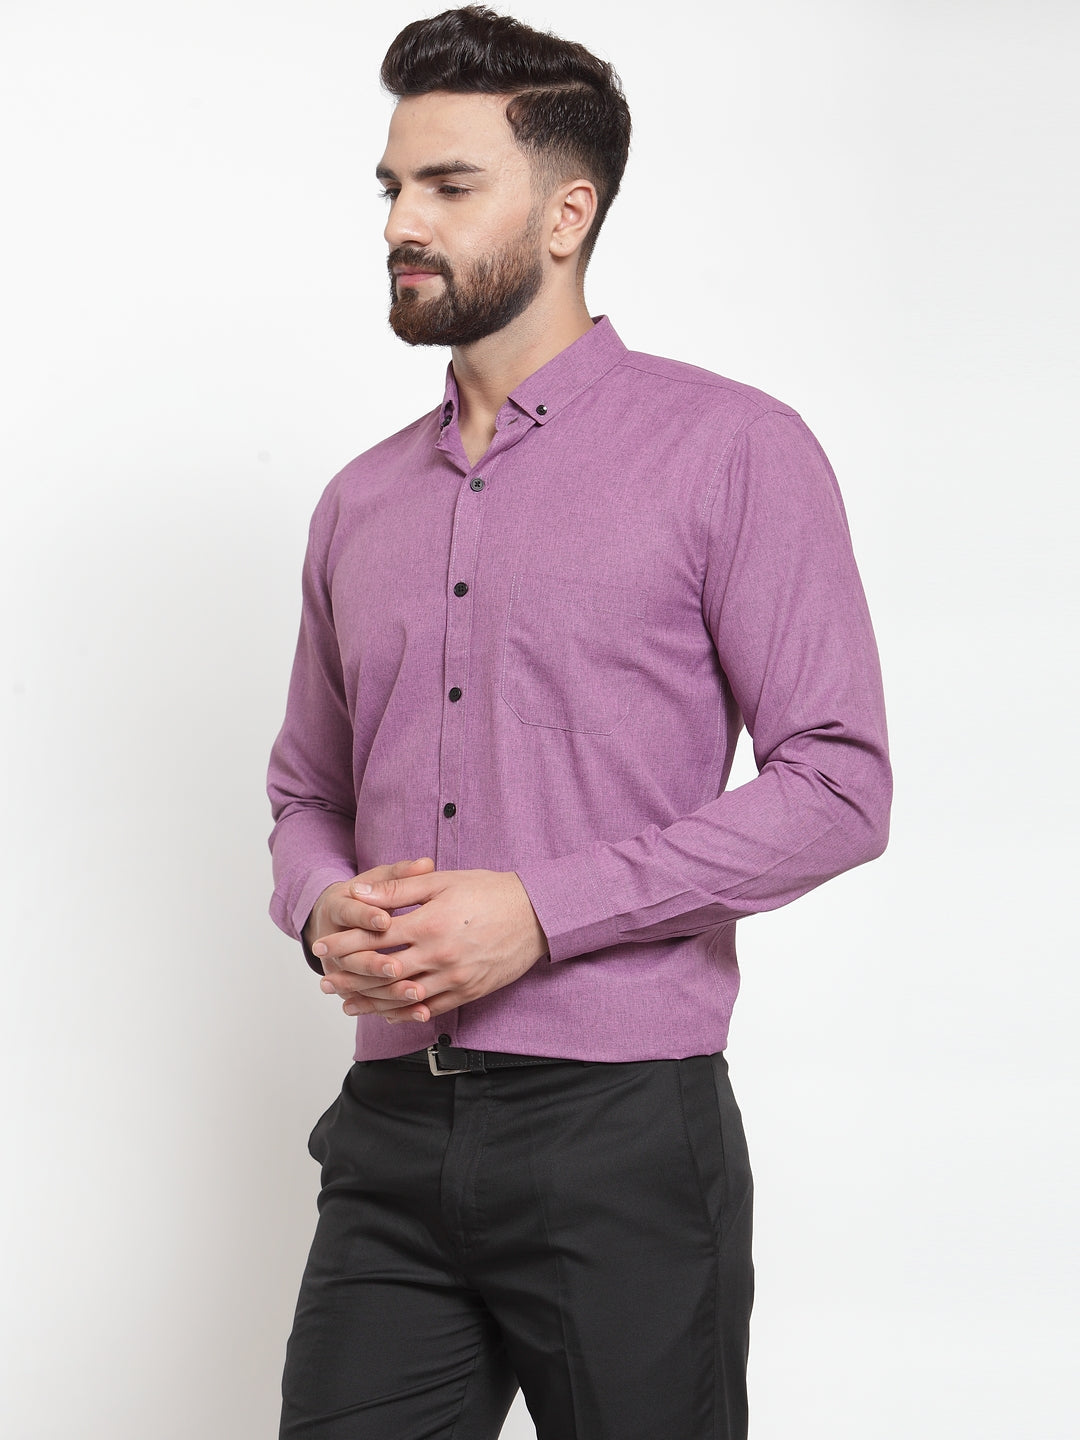 Men's Purple Cotton Solid Button Down Formal Shirts ( SF 734Purple ) - Jainish